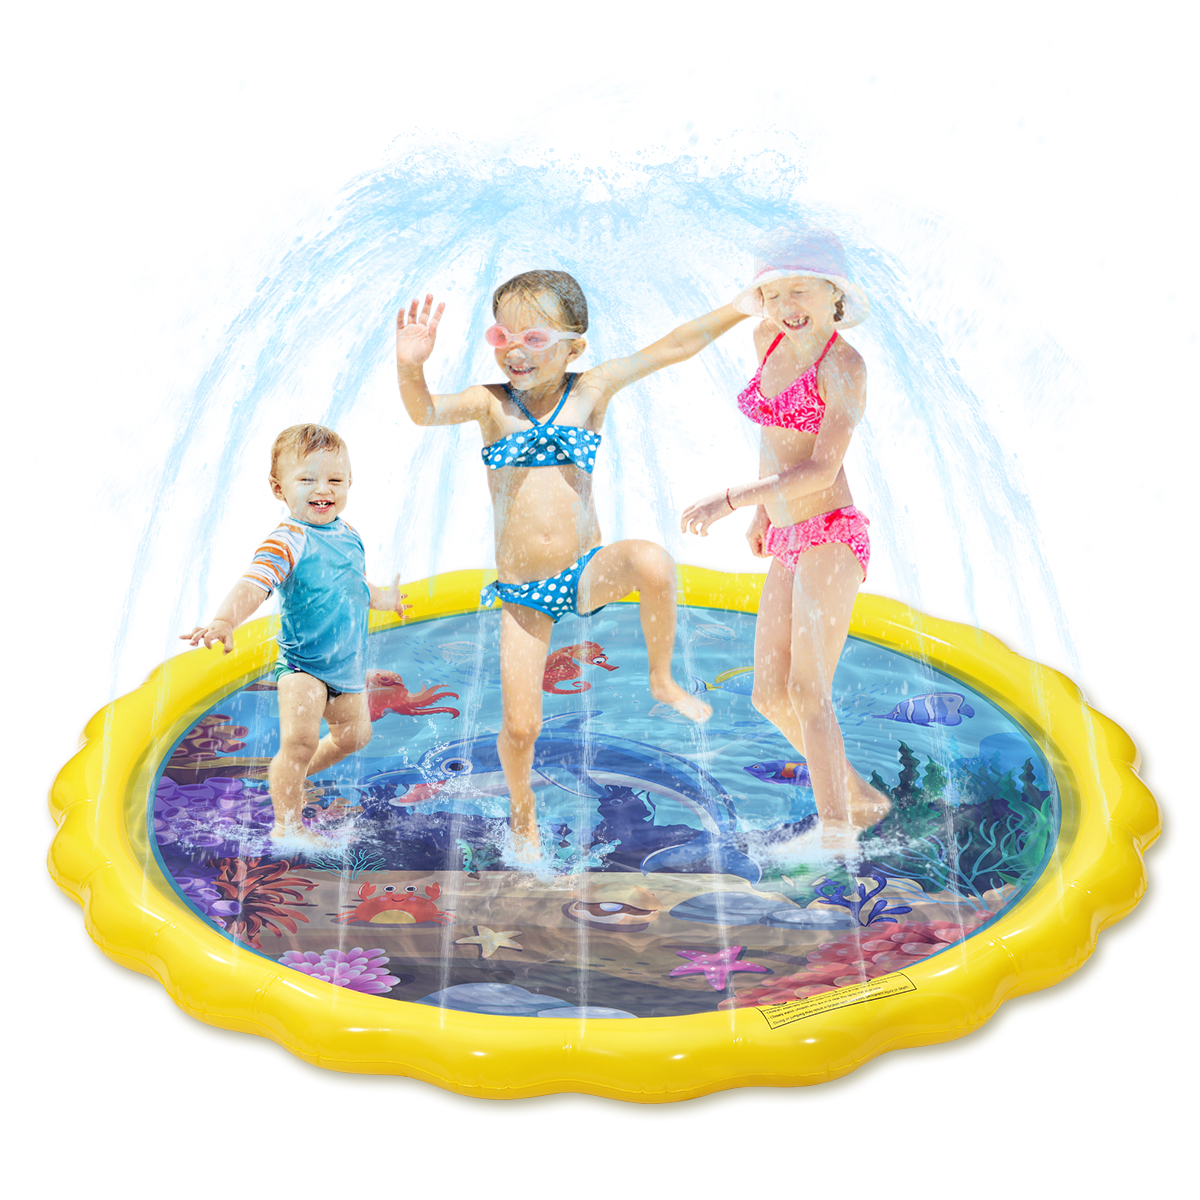 Toyvian Sprinkle and Play Mat 170CM Inflatable Sprinkler Pad for Kids Kids Sprinklers for Summer Outdoor Garden Beach 